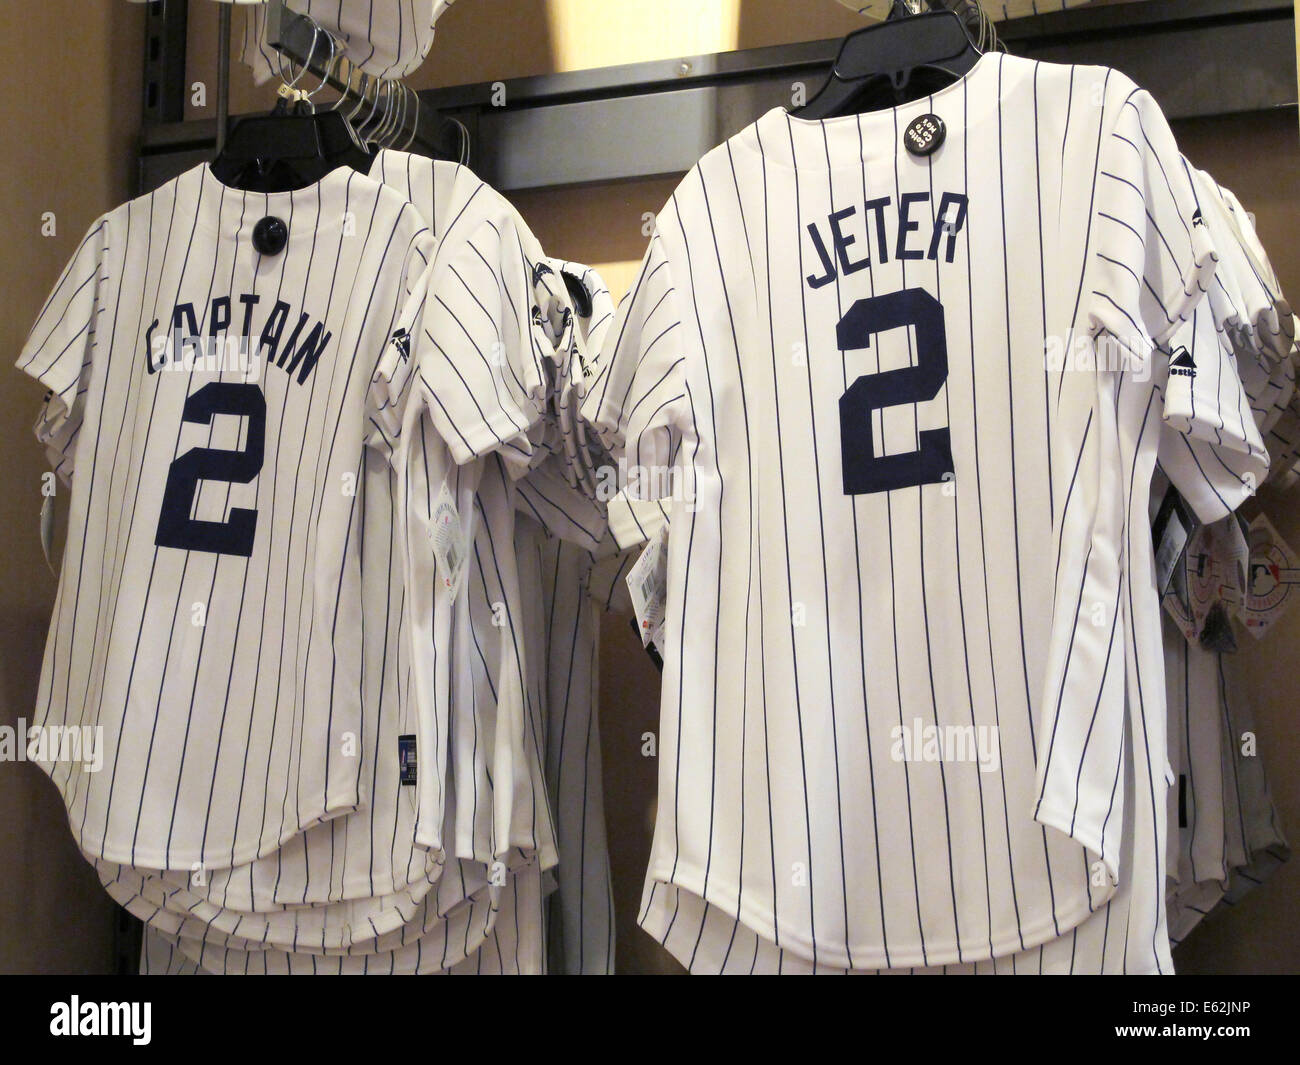 Derek Jeter Yankee uniformes, Modell's Sporting Goods Store intérieur, NYC Banque D'Images